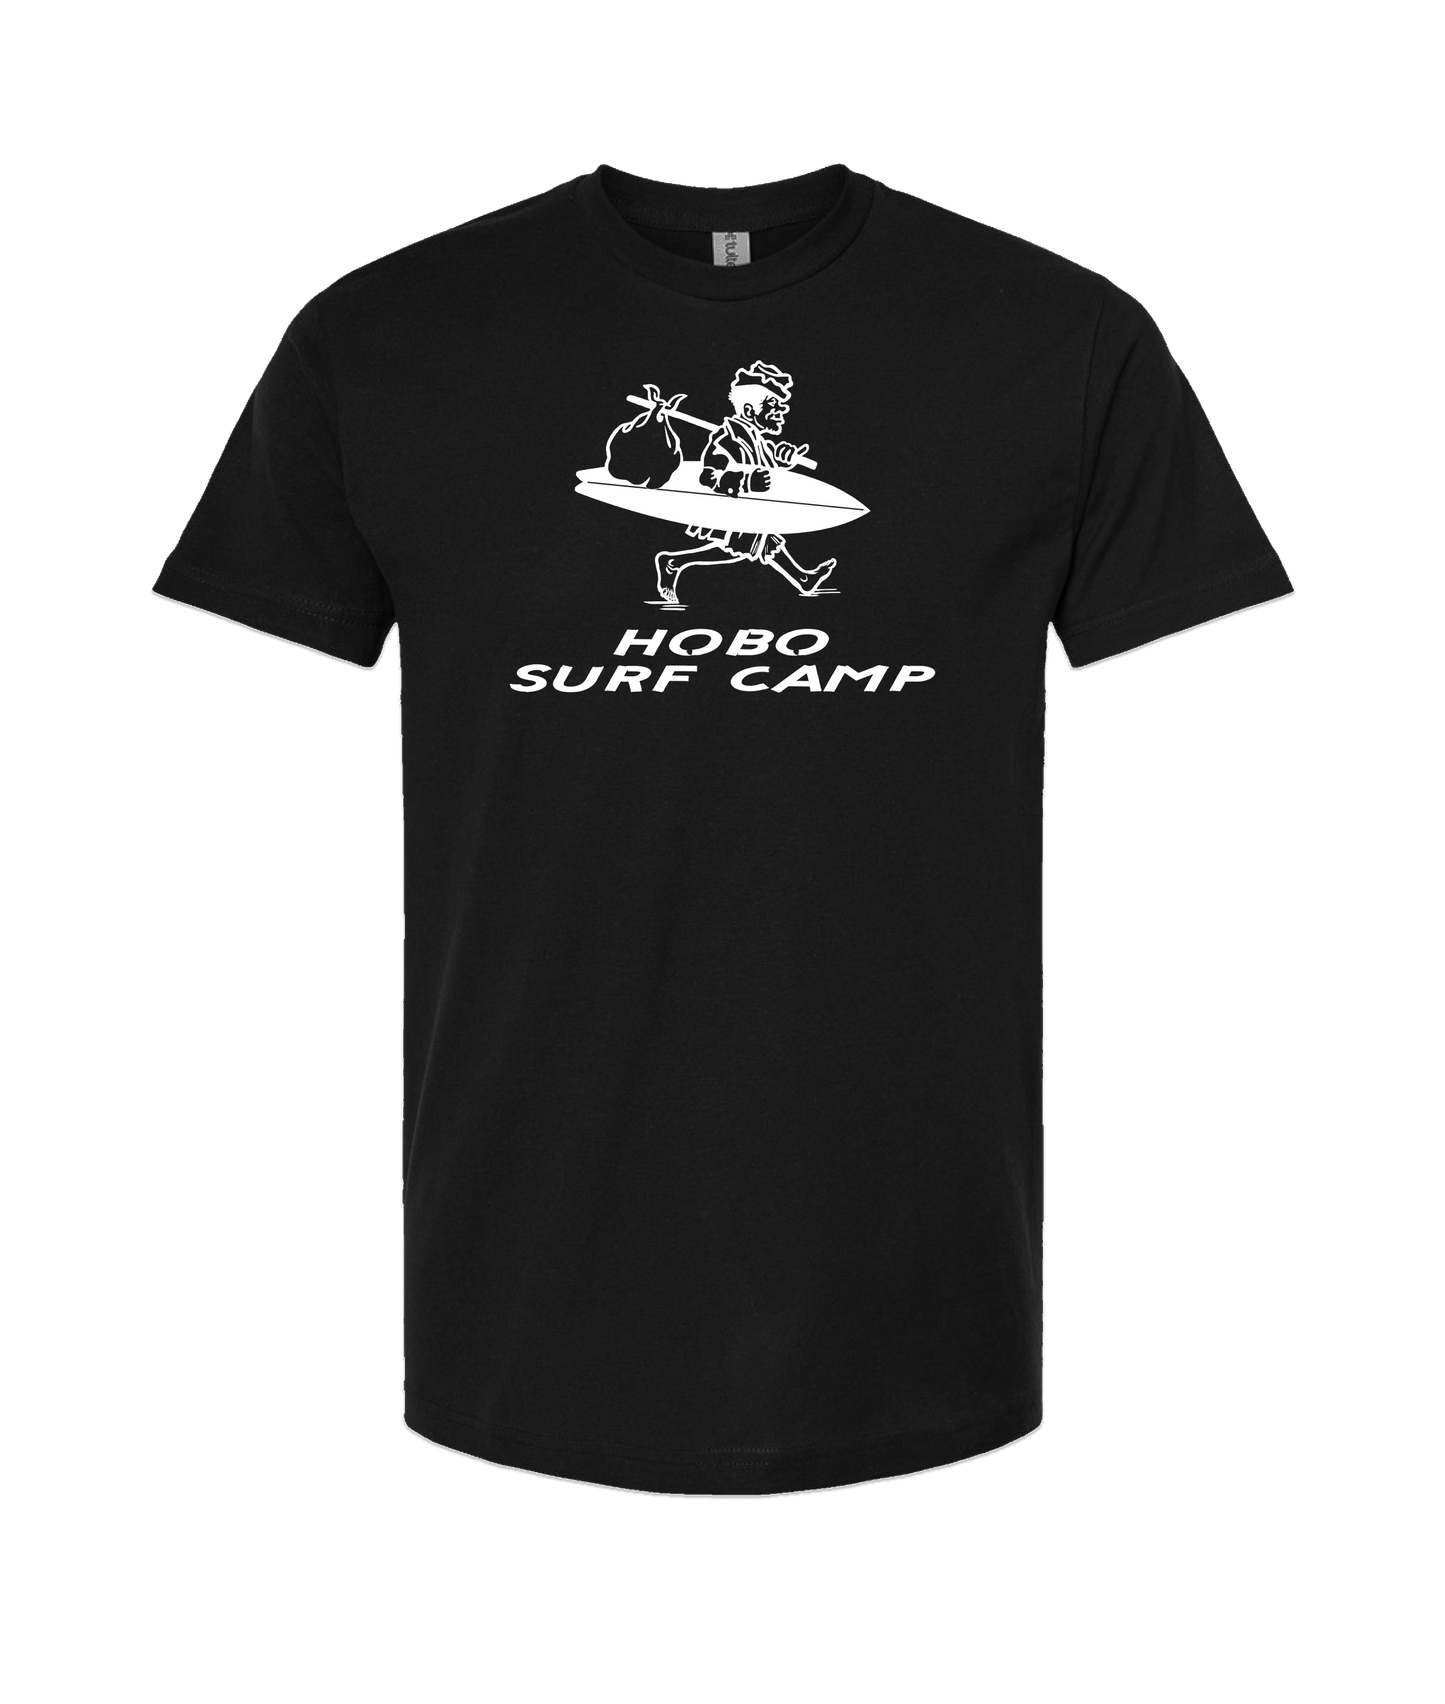 Dugz Shirtz - Hobo Surf Camp - Black T Shirt